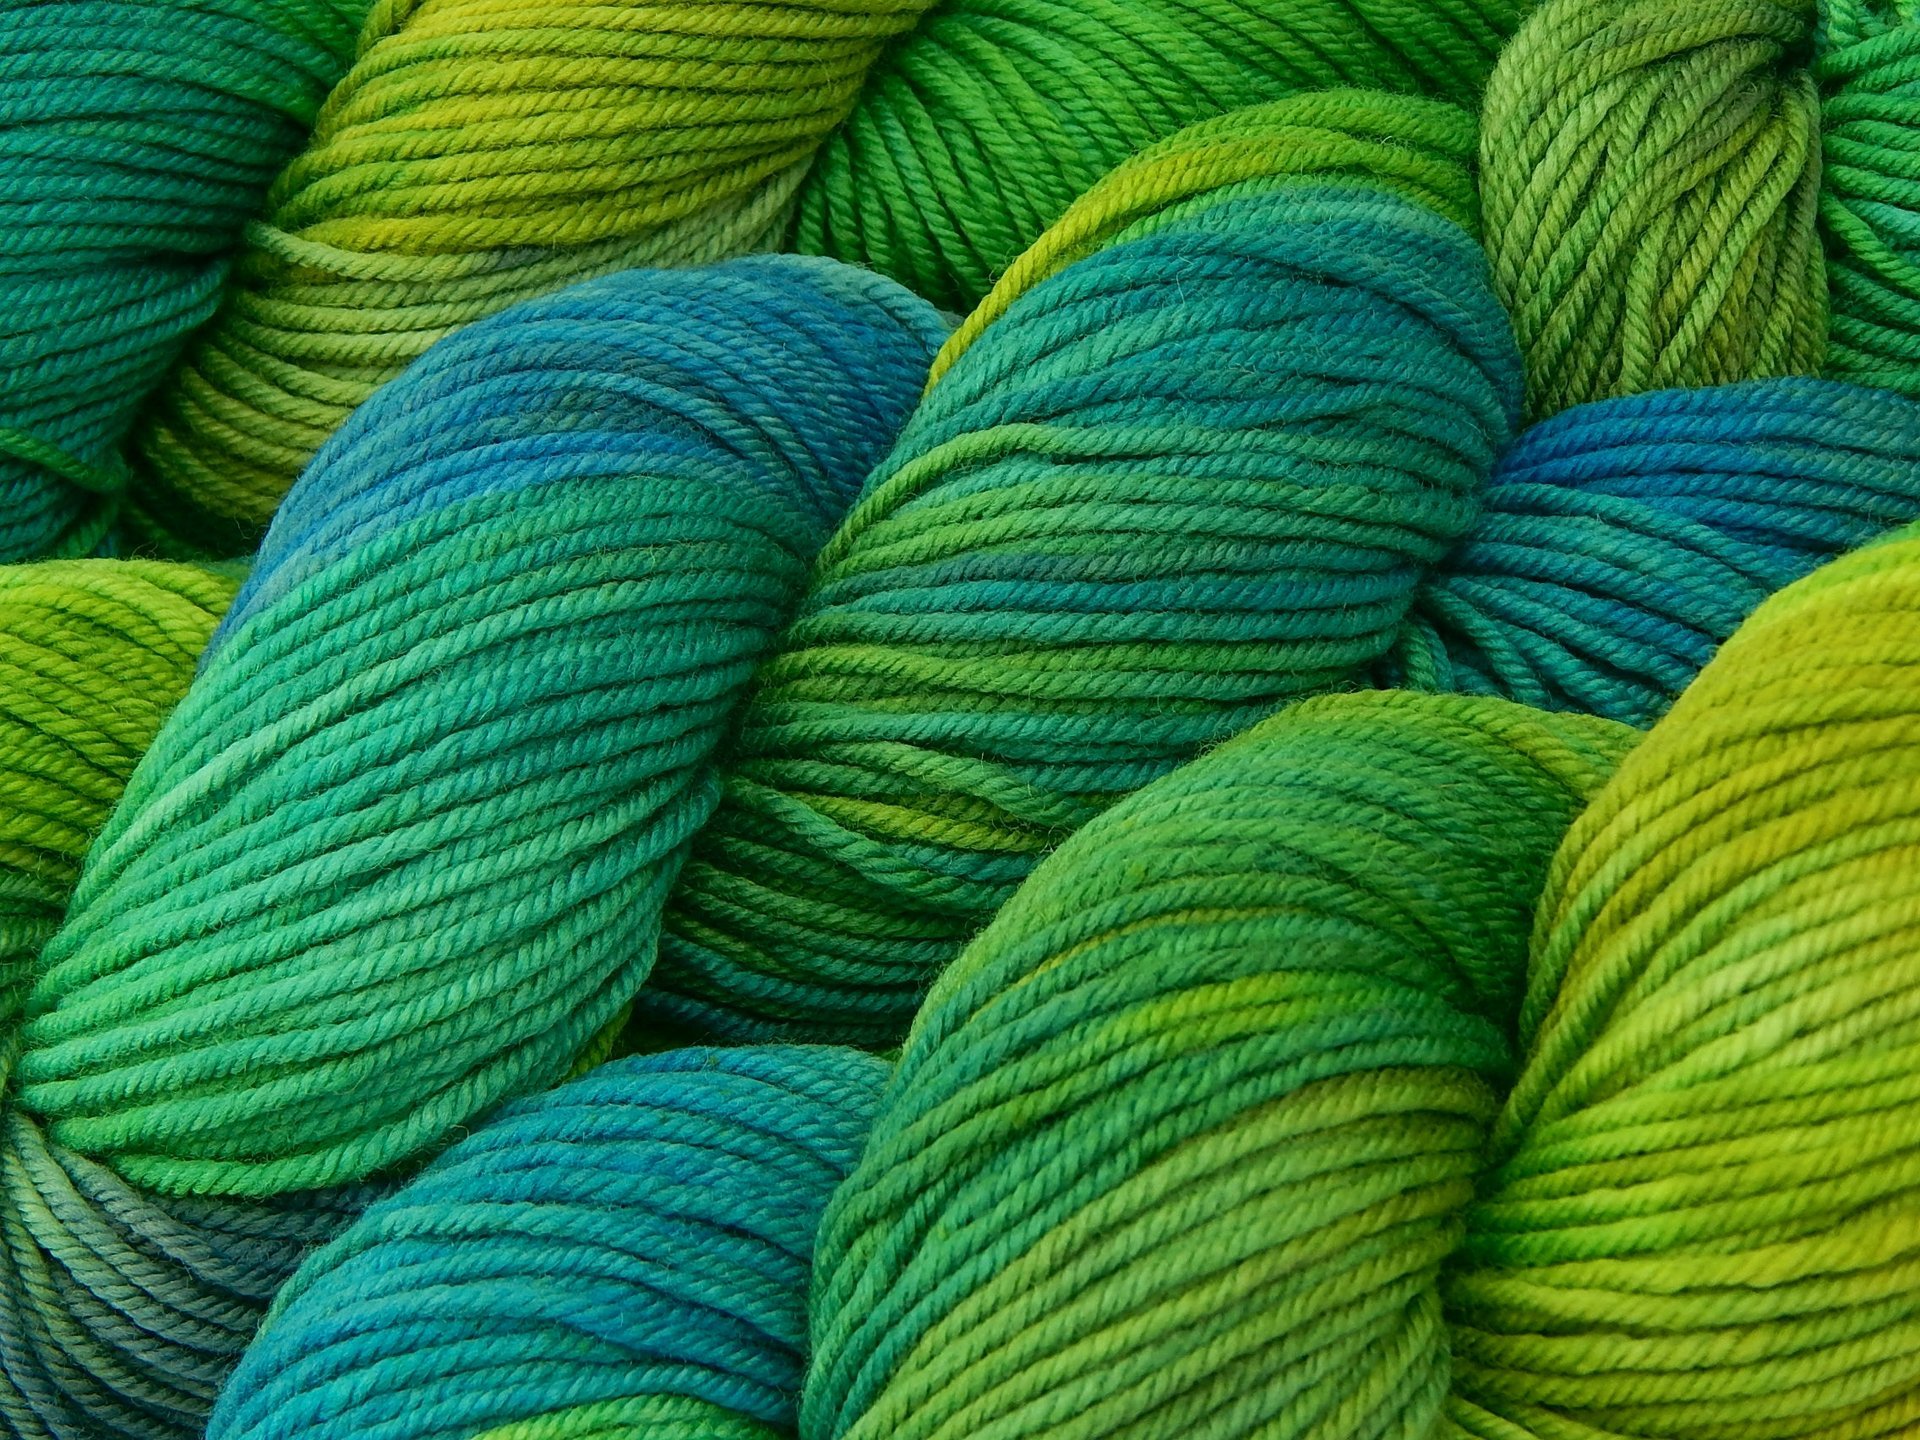 Hand Dyed Yarn, DK Weight Superwash Merino Wool - Potluck Blues & Greens - Colorful Tropical Shades, Indie Dyer Knitting Yarn